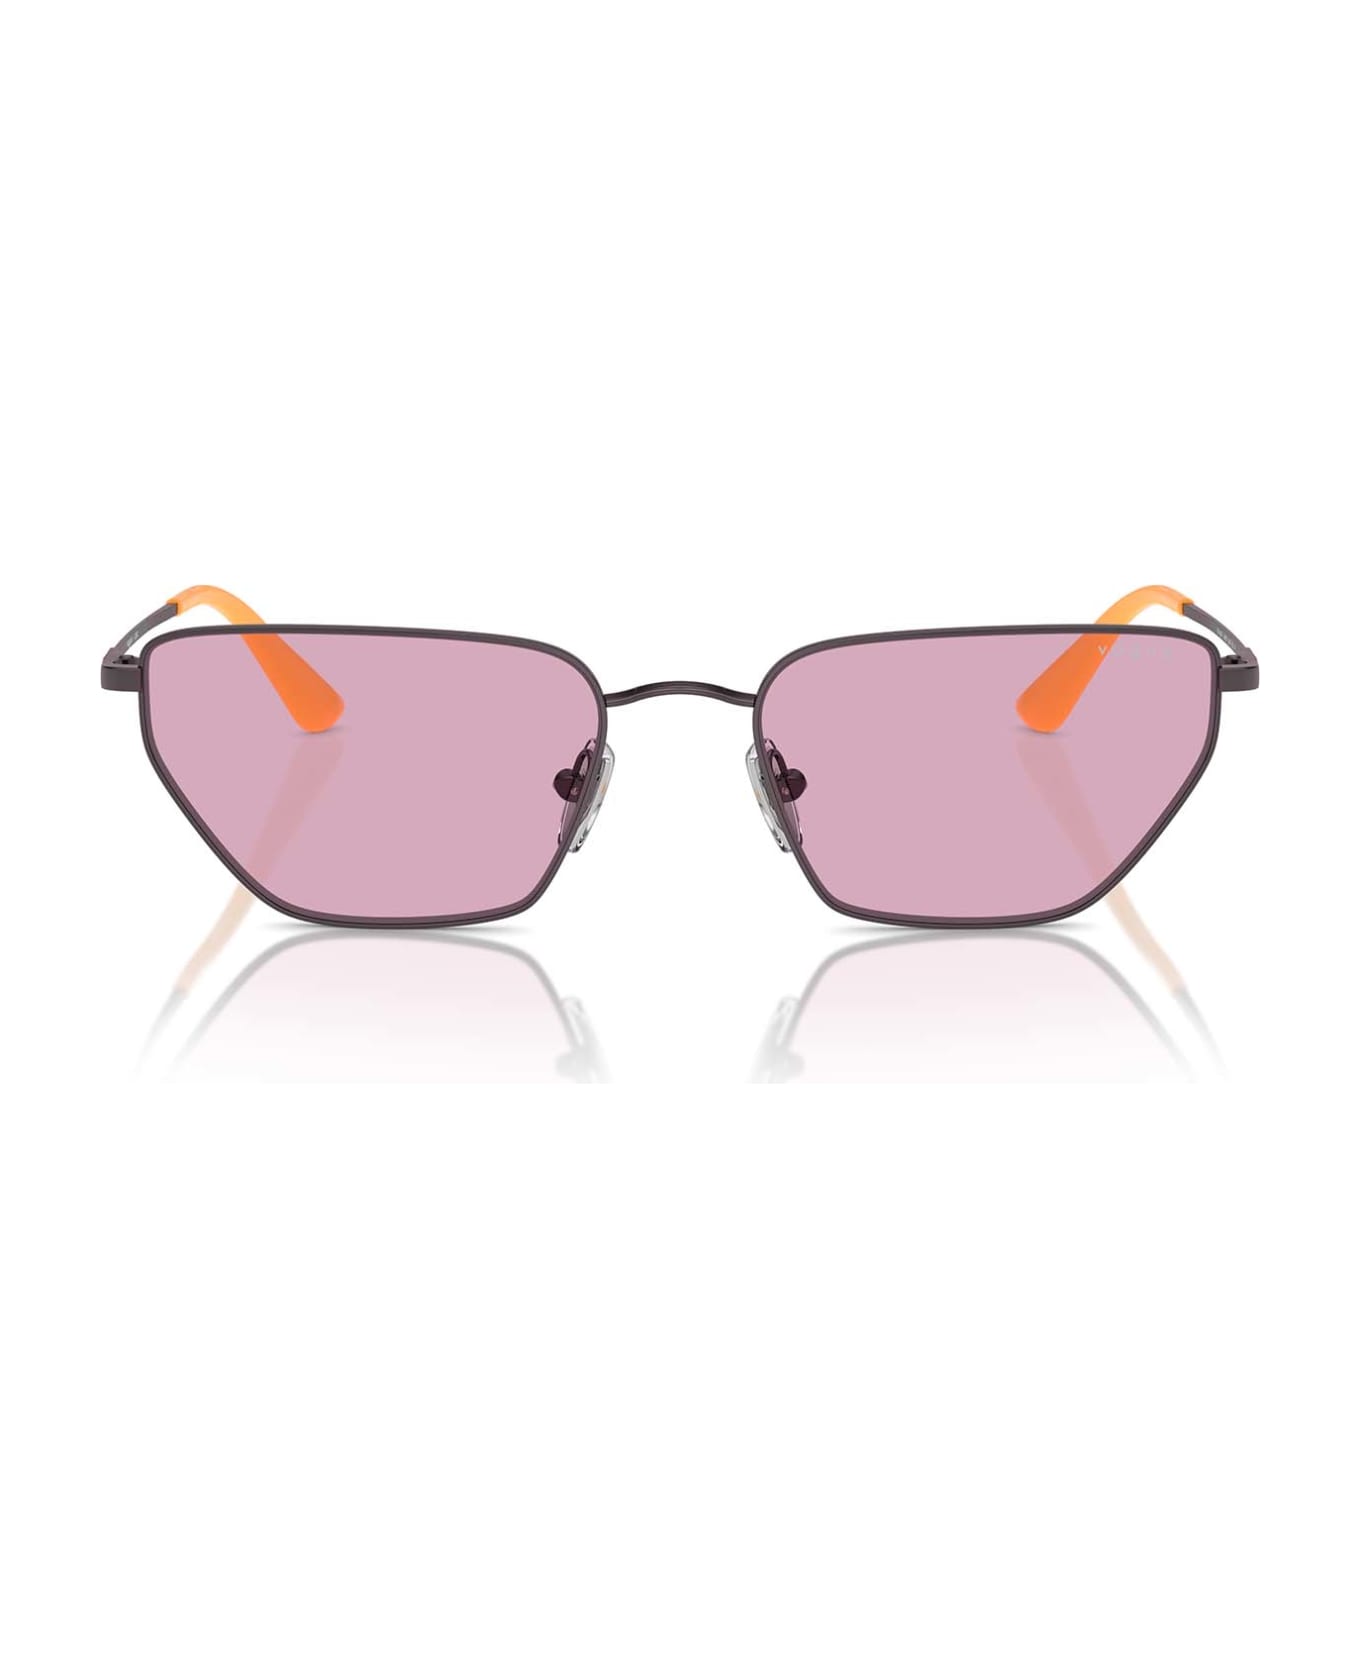 Vogue Eyewear Vo4316s Light Violet Sunglasses - Light Violet